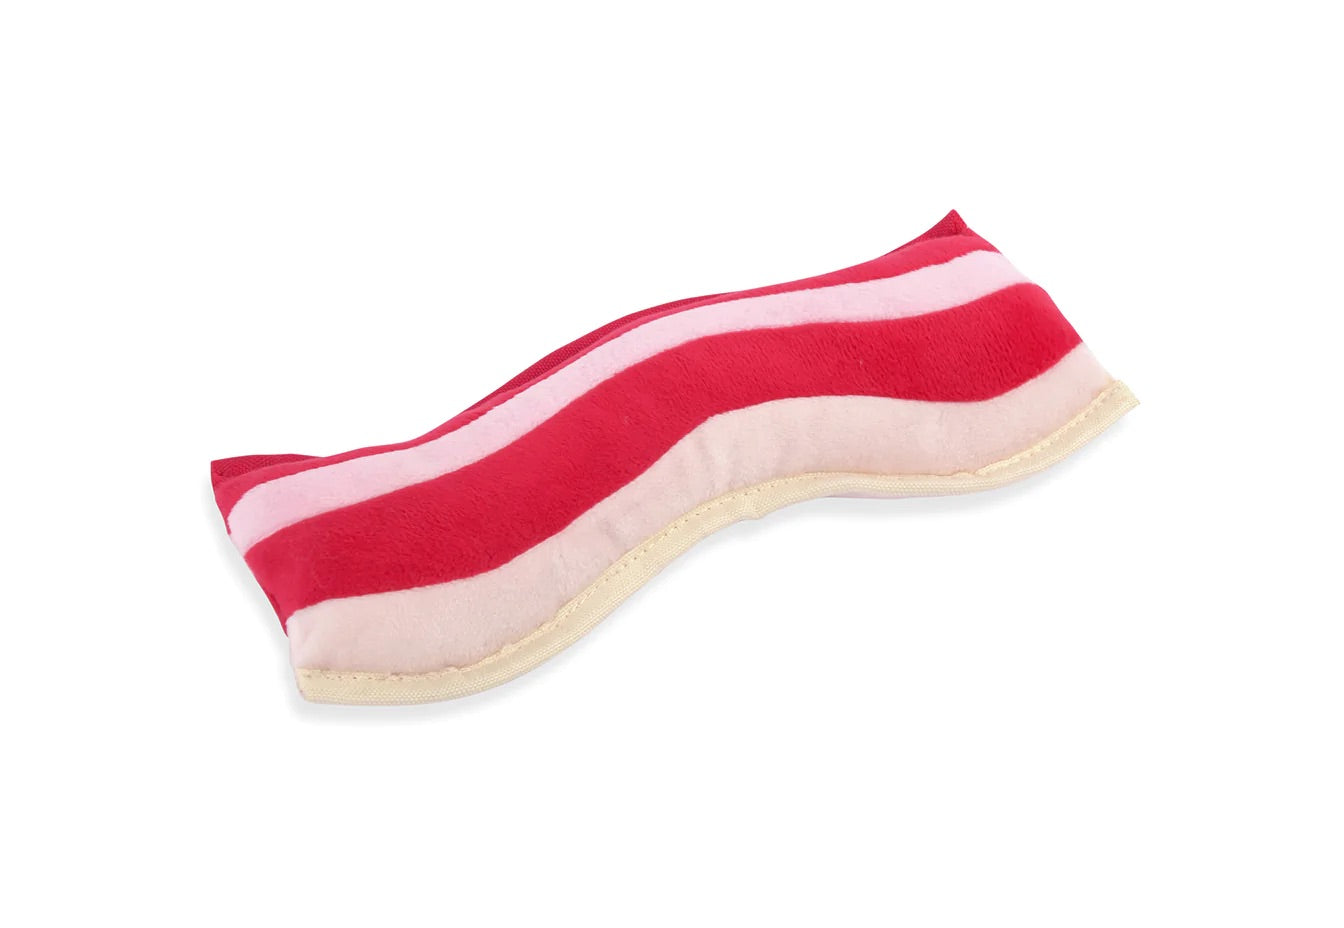 Crispy Bacon Toy